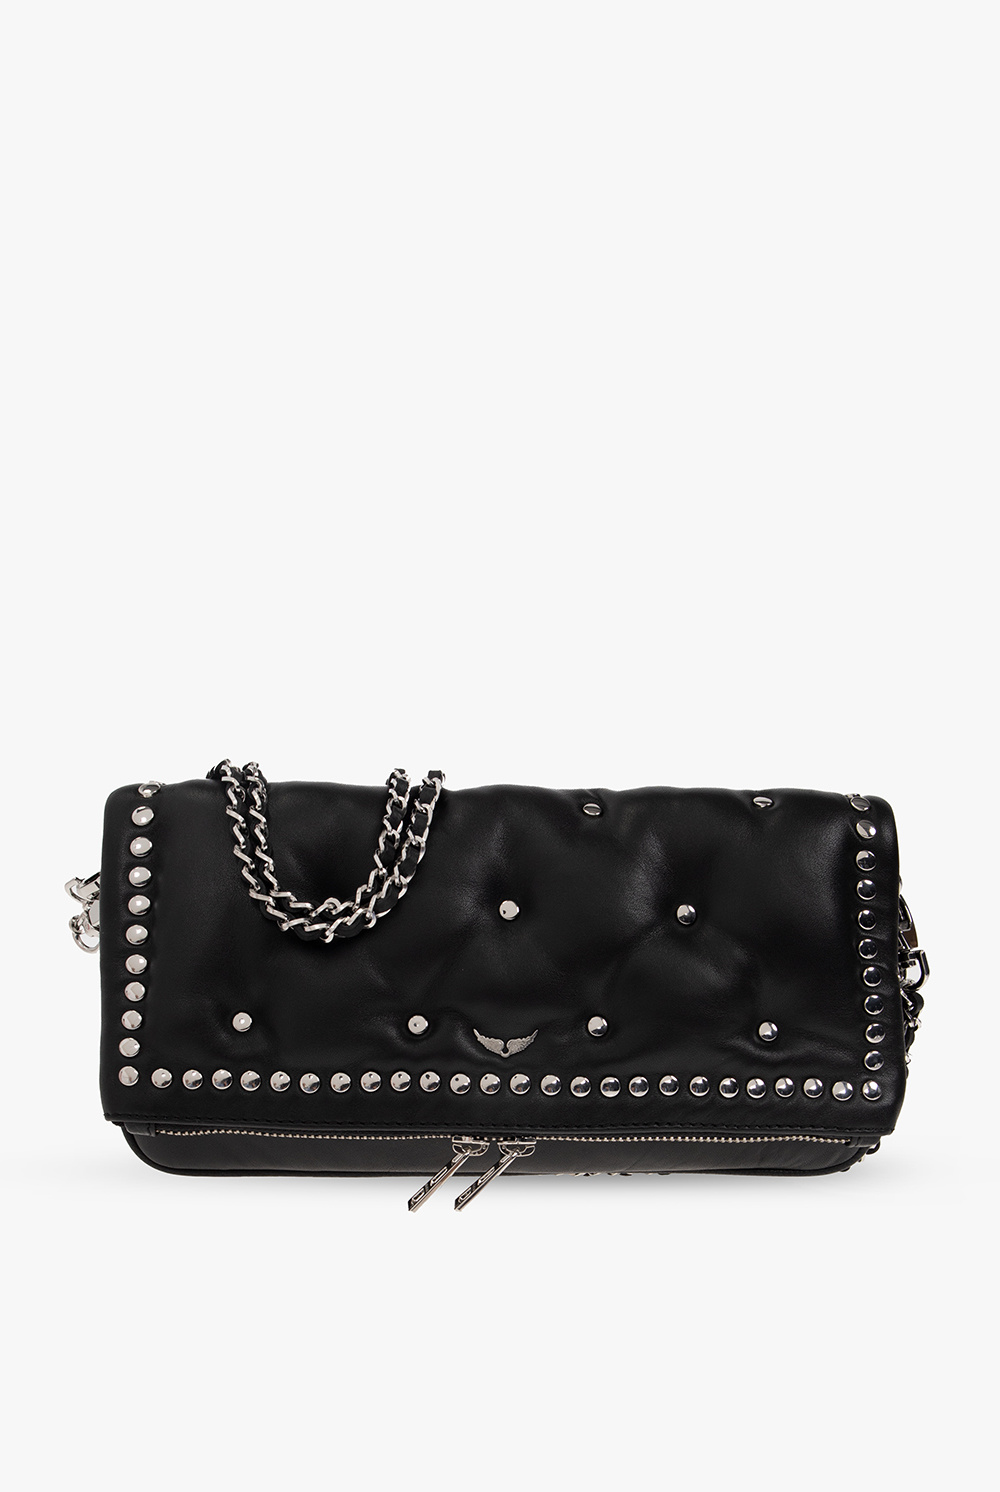 Zadig & Voltaire Womens Noir Matelasse Leather Wallet 1 Size